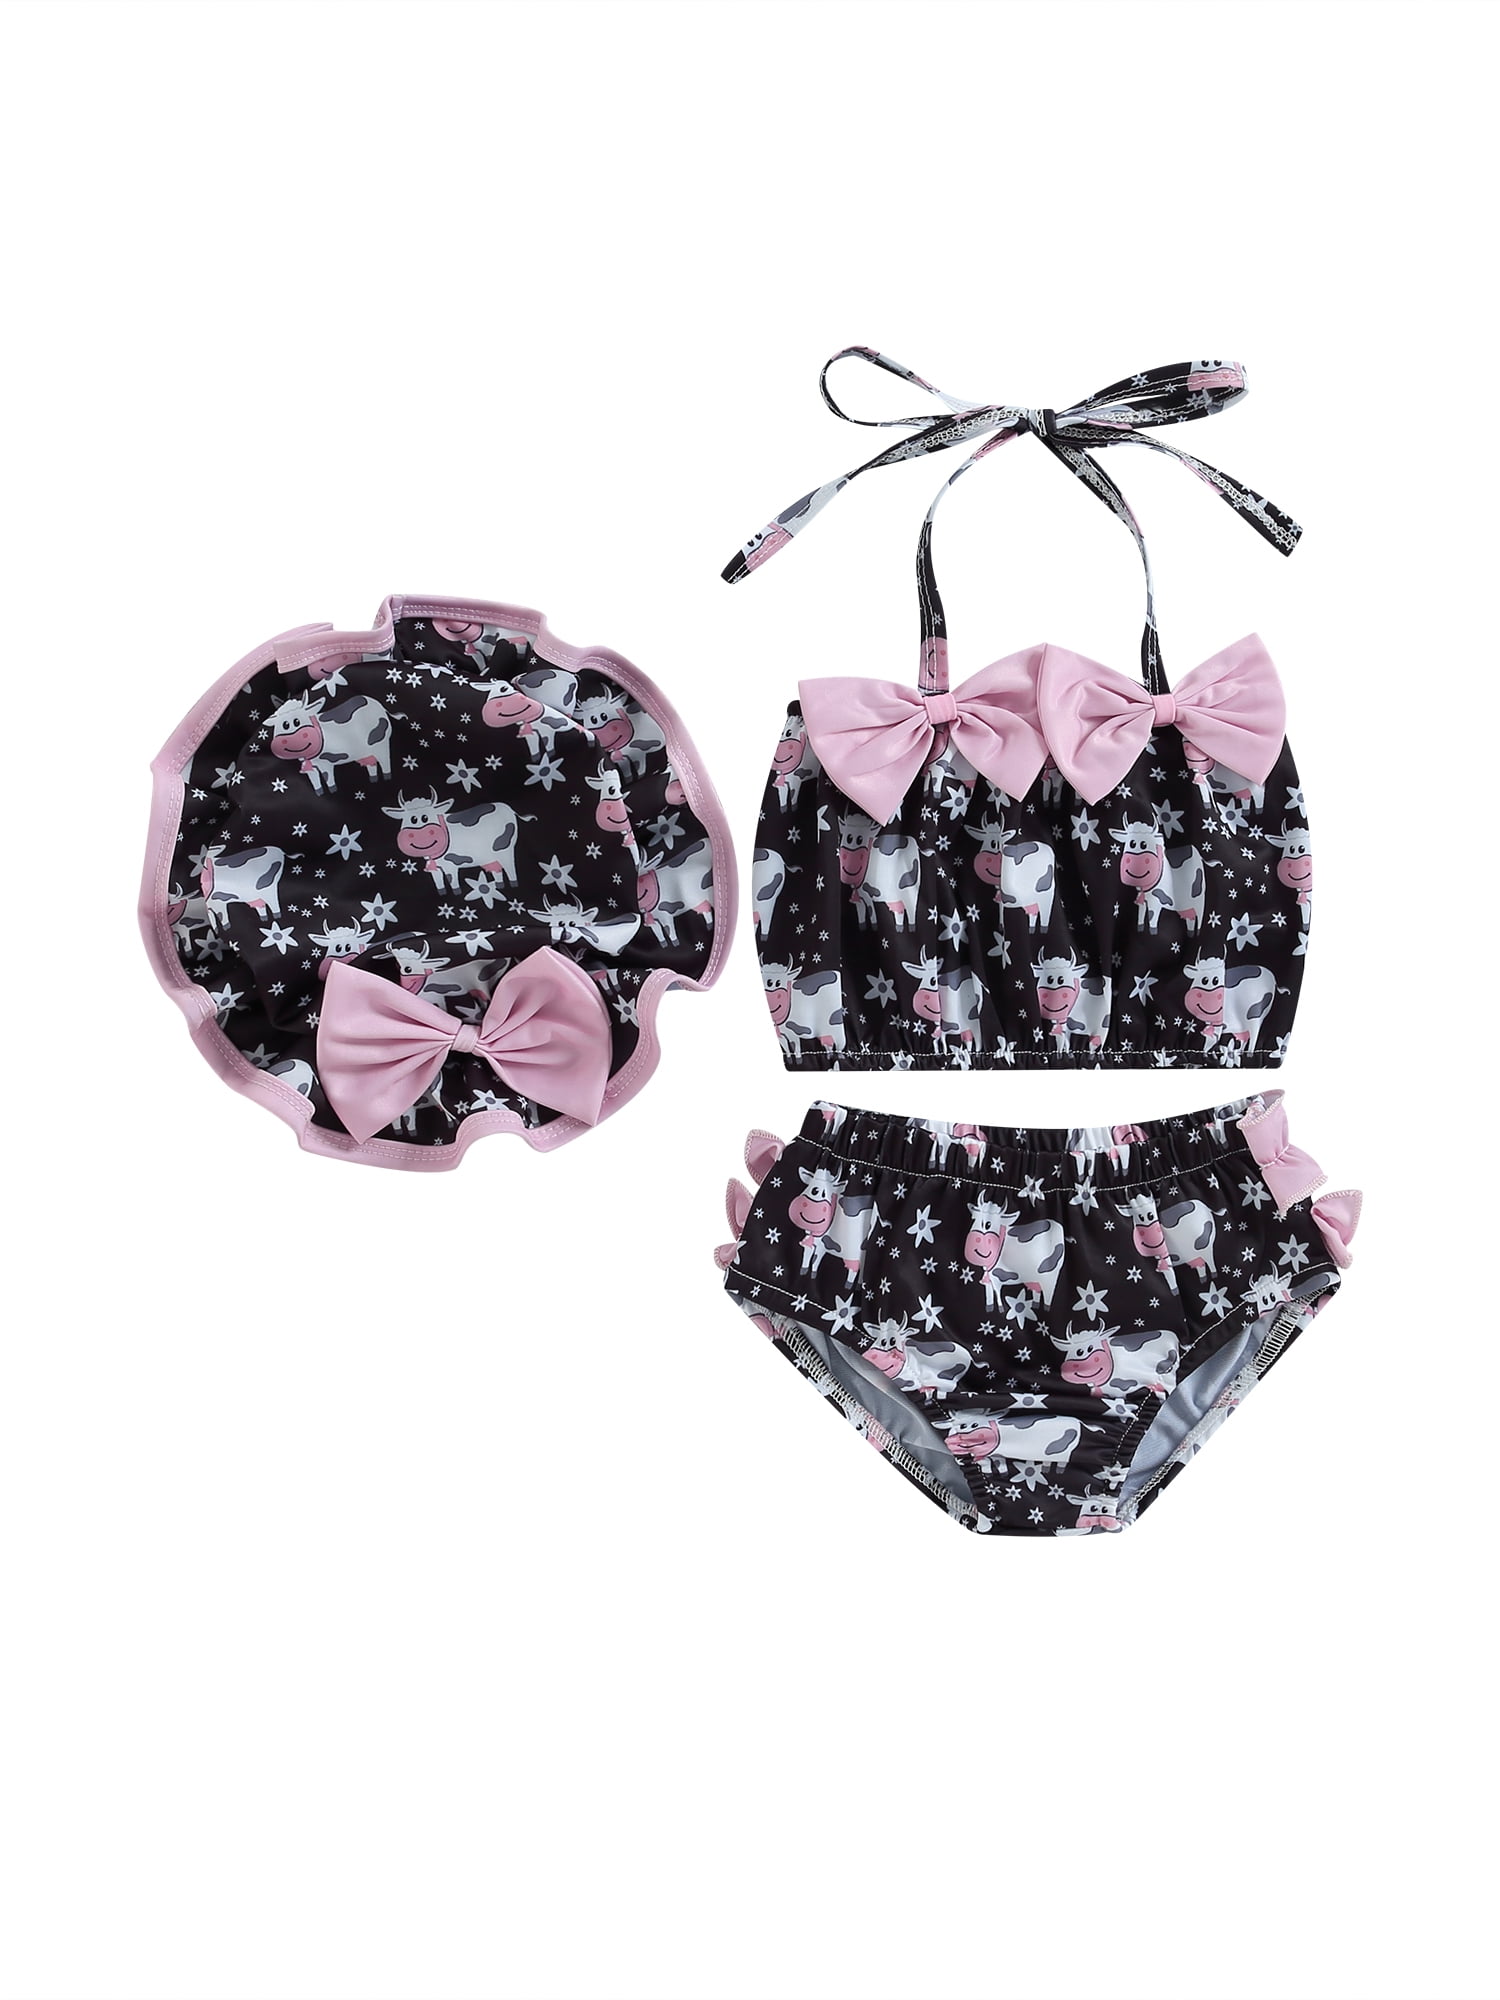 Baby Girl Swimsuits Infant Bathing Suit Bikini Sets 3Pcs Summer Beach ...